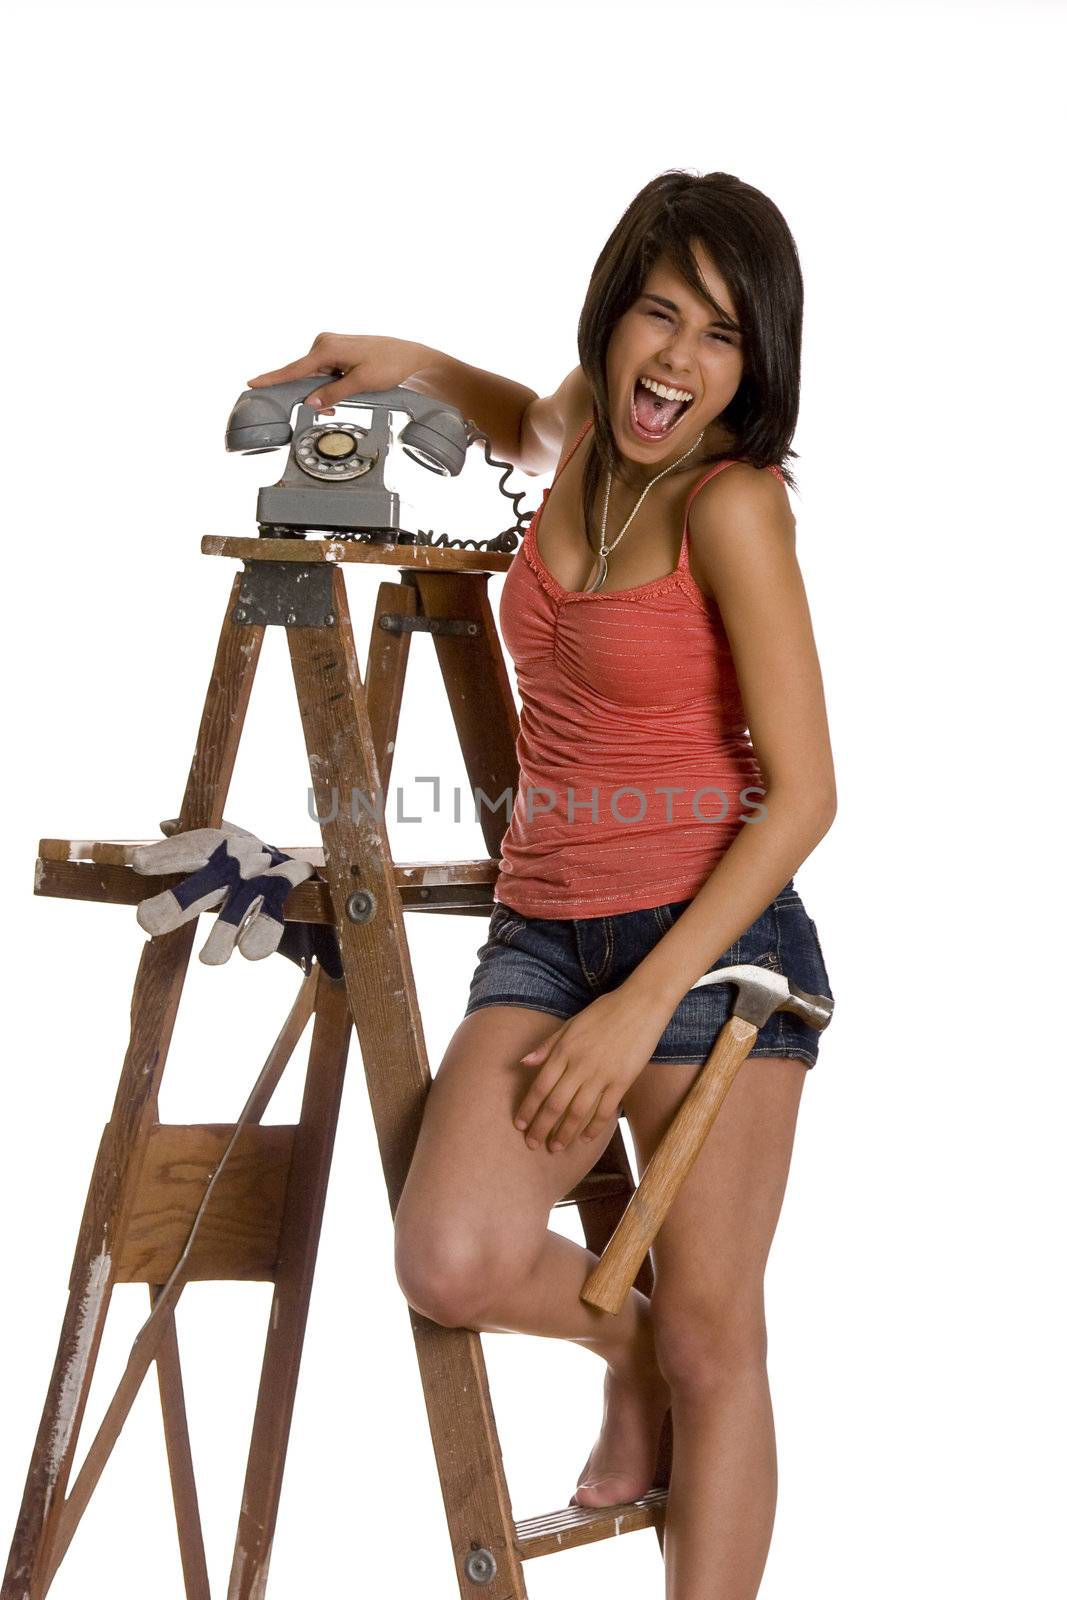 teenage girl standing on ladder screaming while slamming an old rotary phone